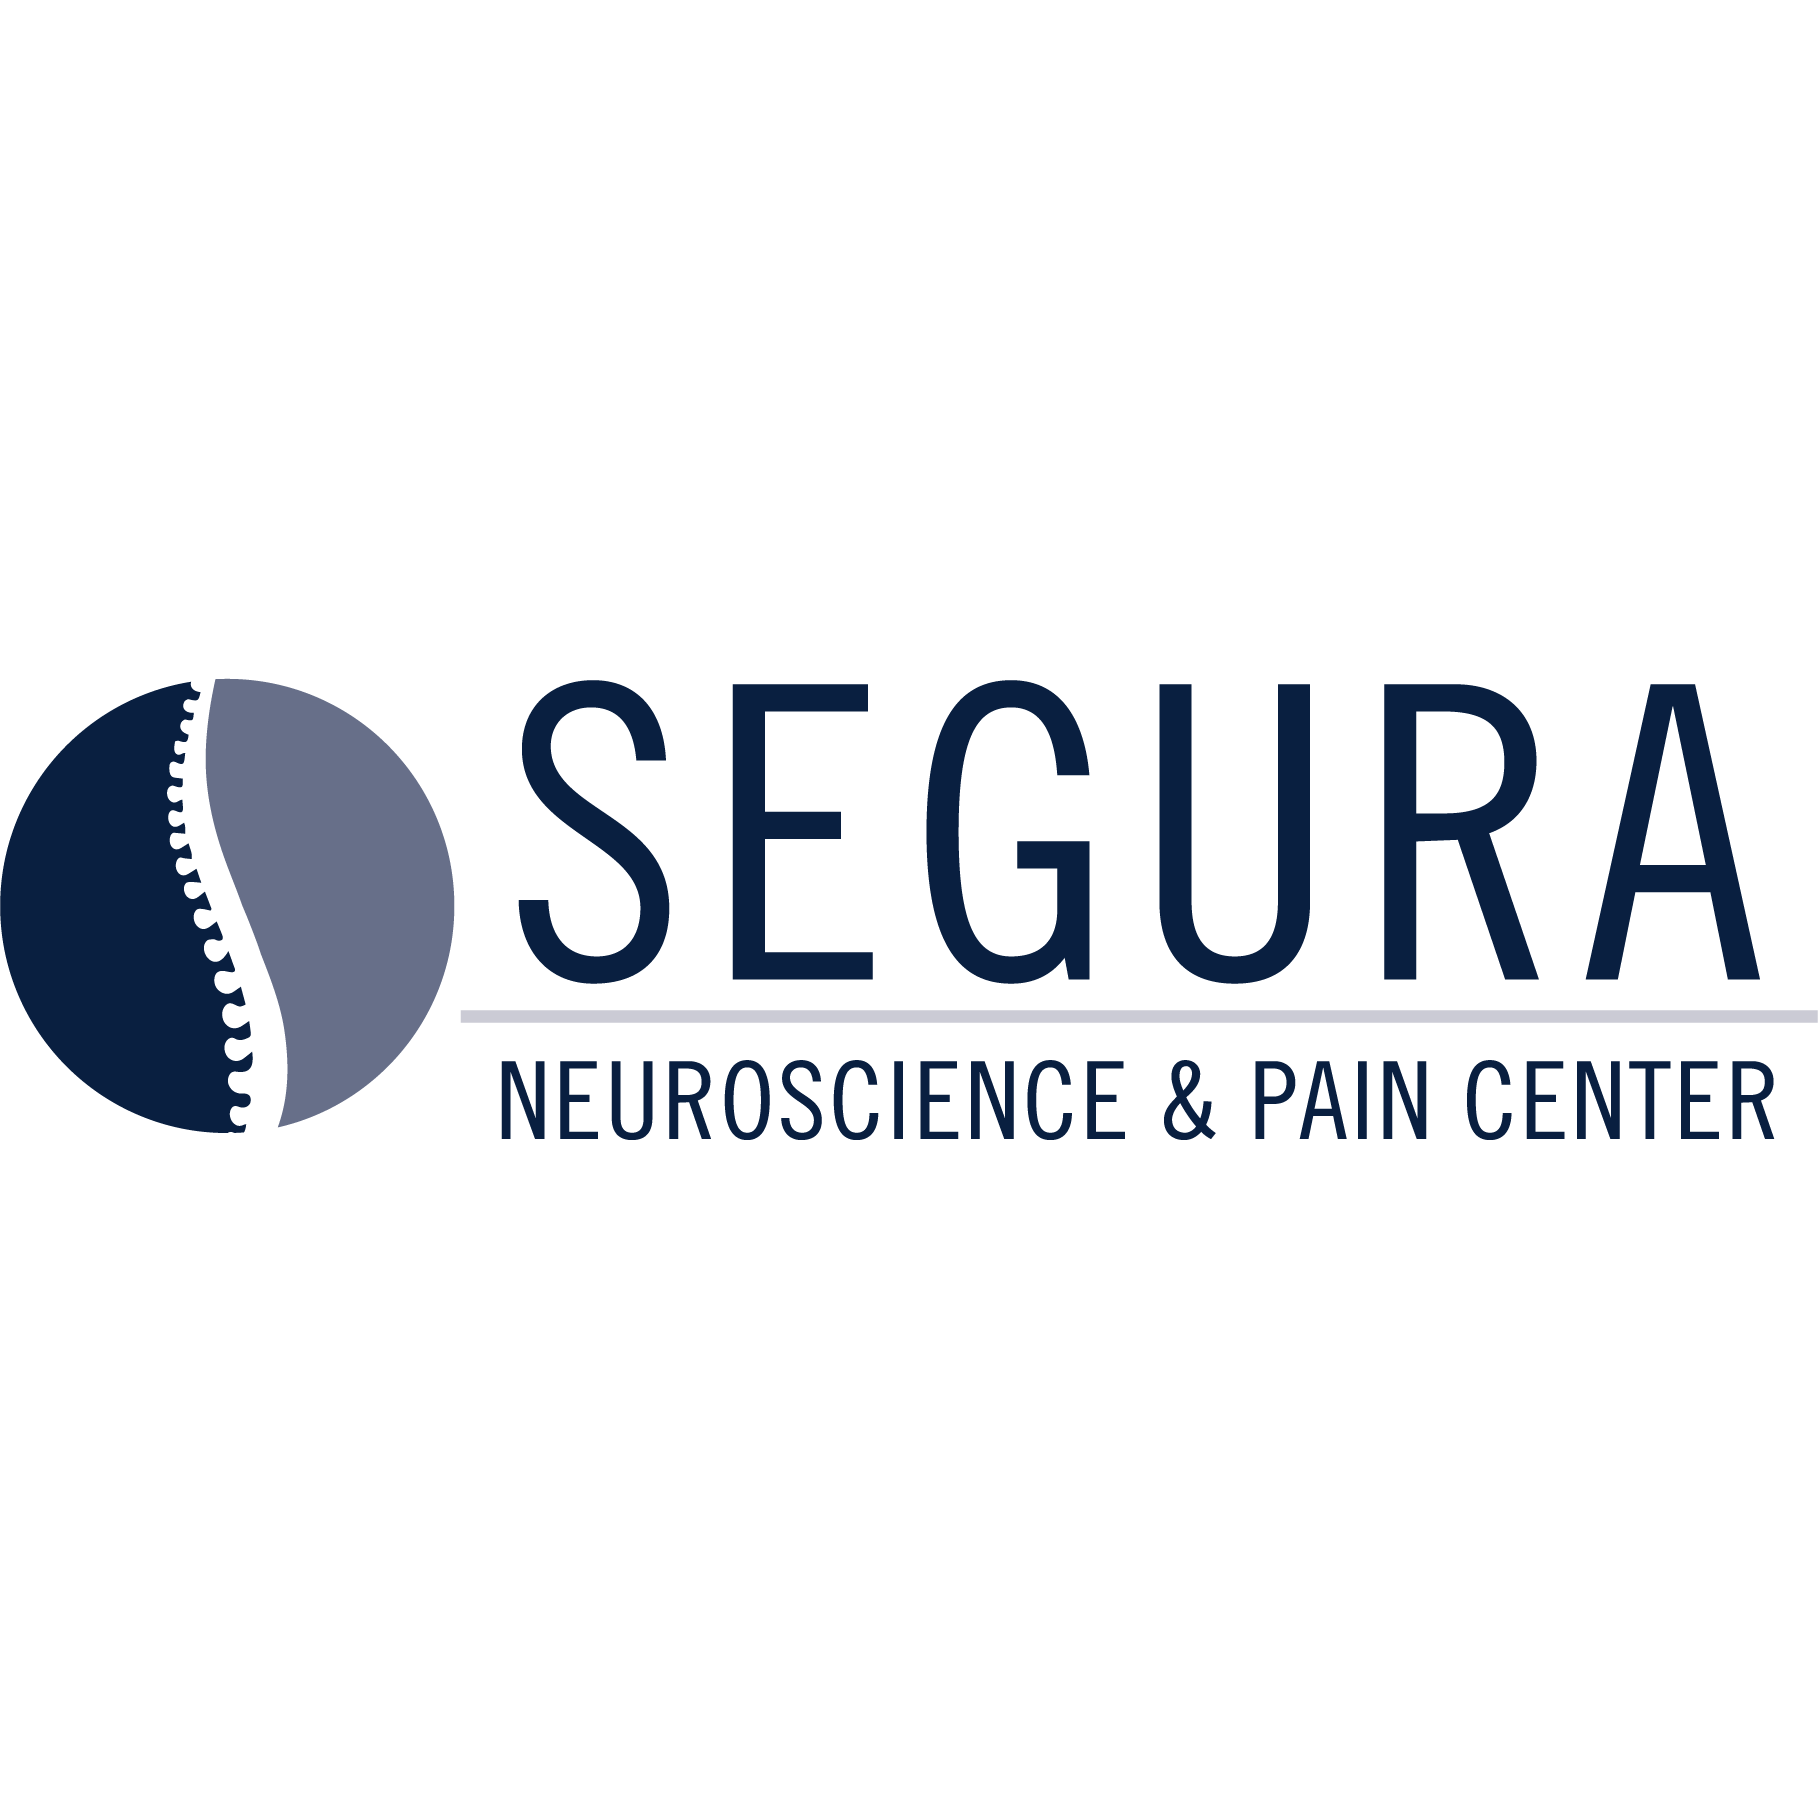 Segura Neuroscience & Pain Center - Covington, LA 70433 - (985)231-6751 | ShowMeLocal.com